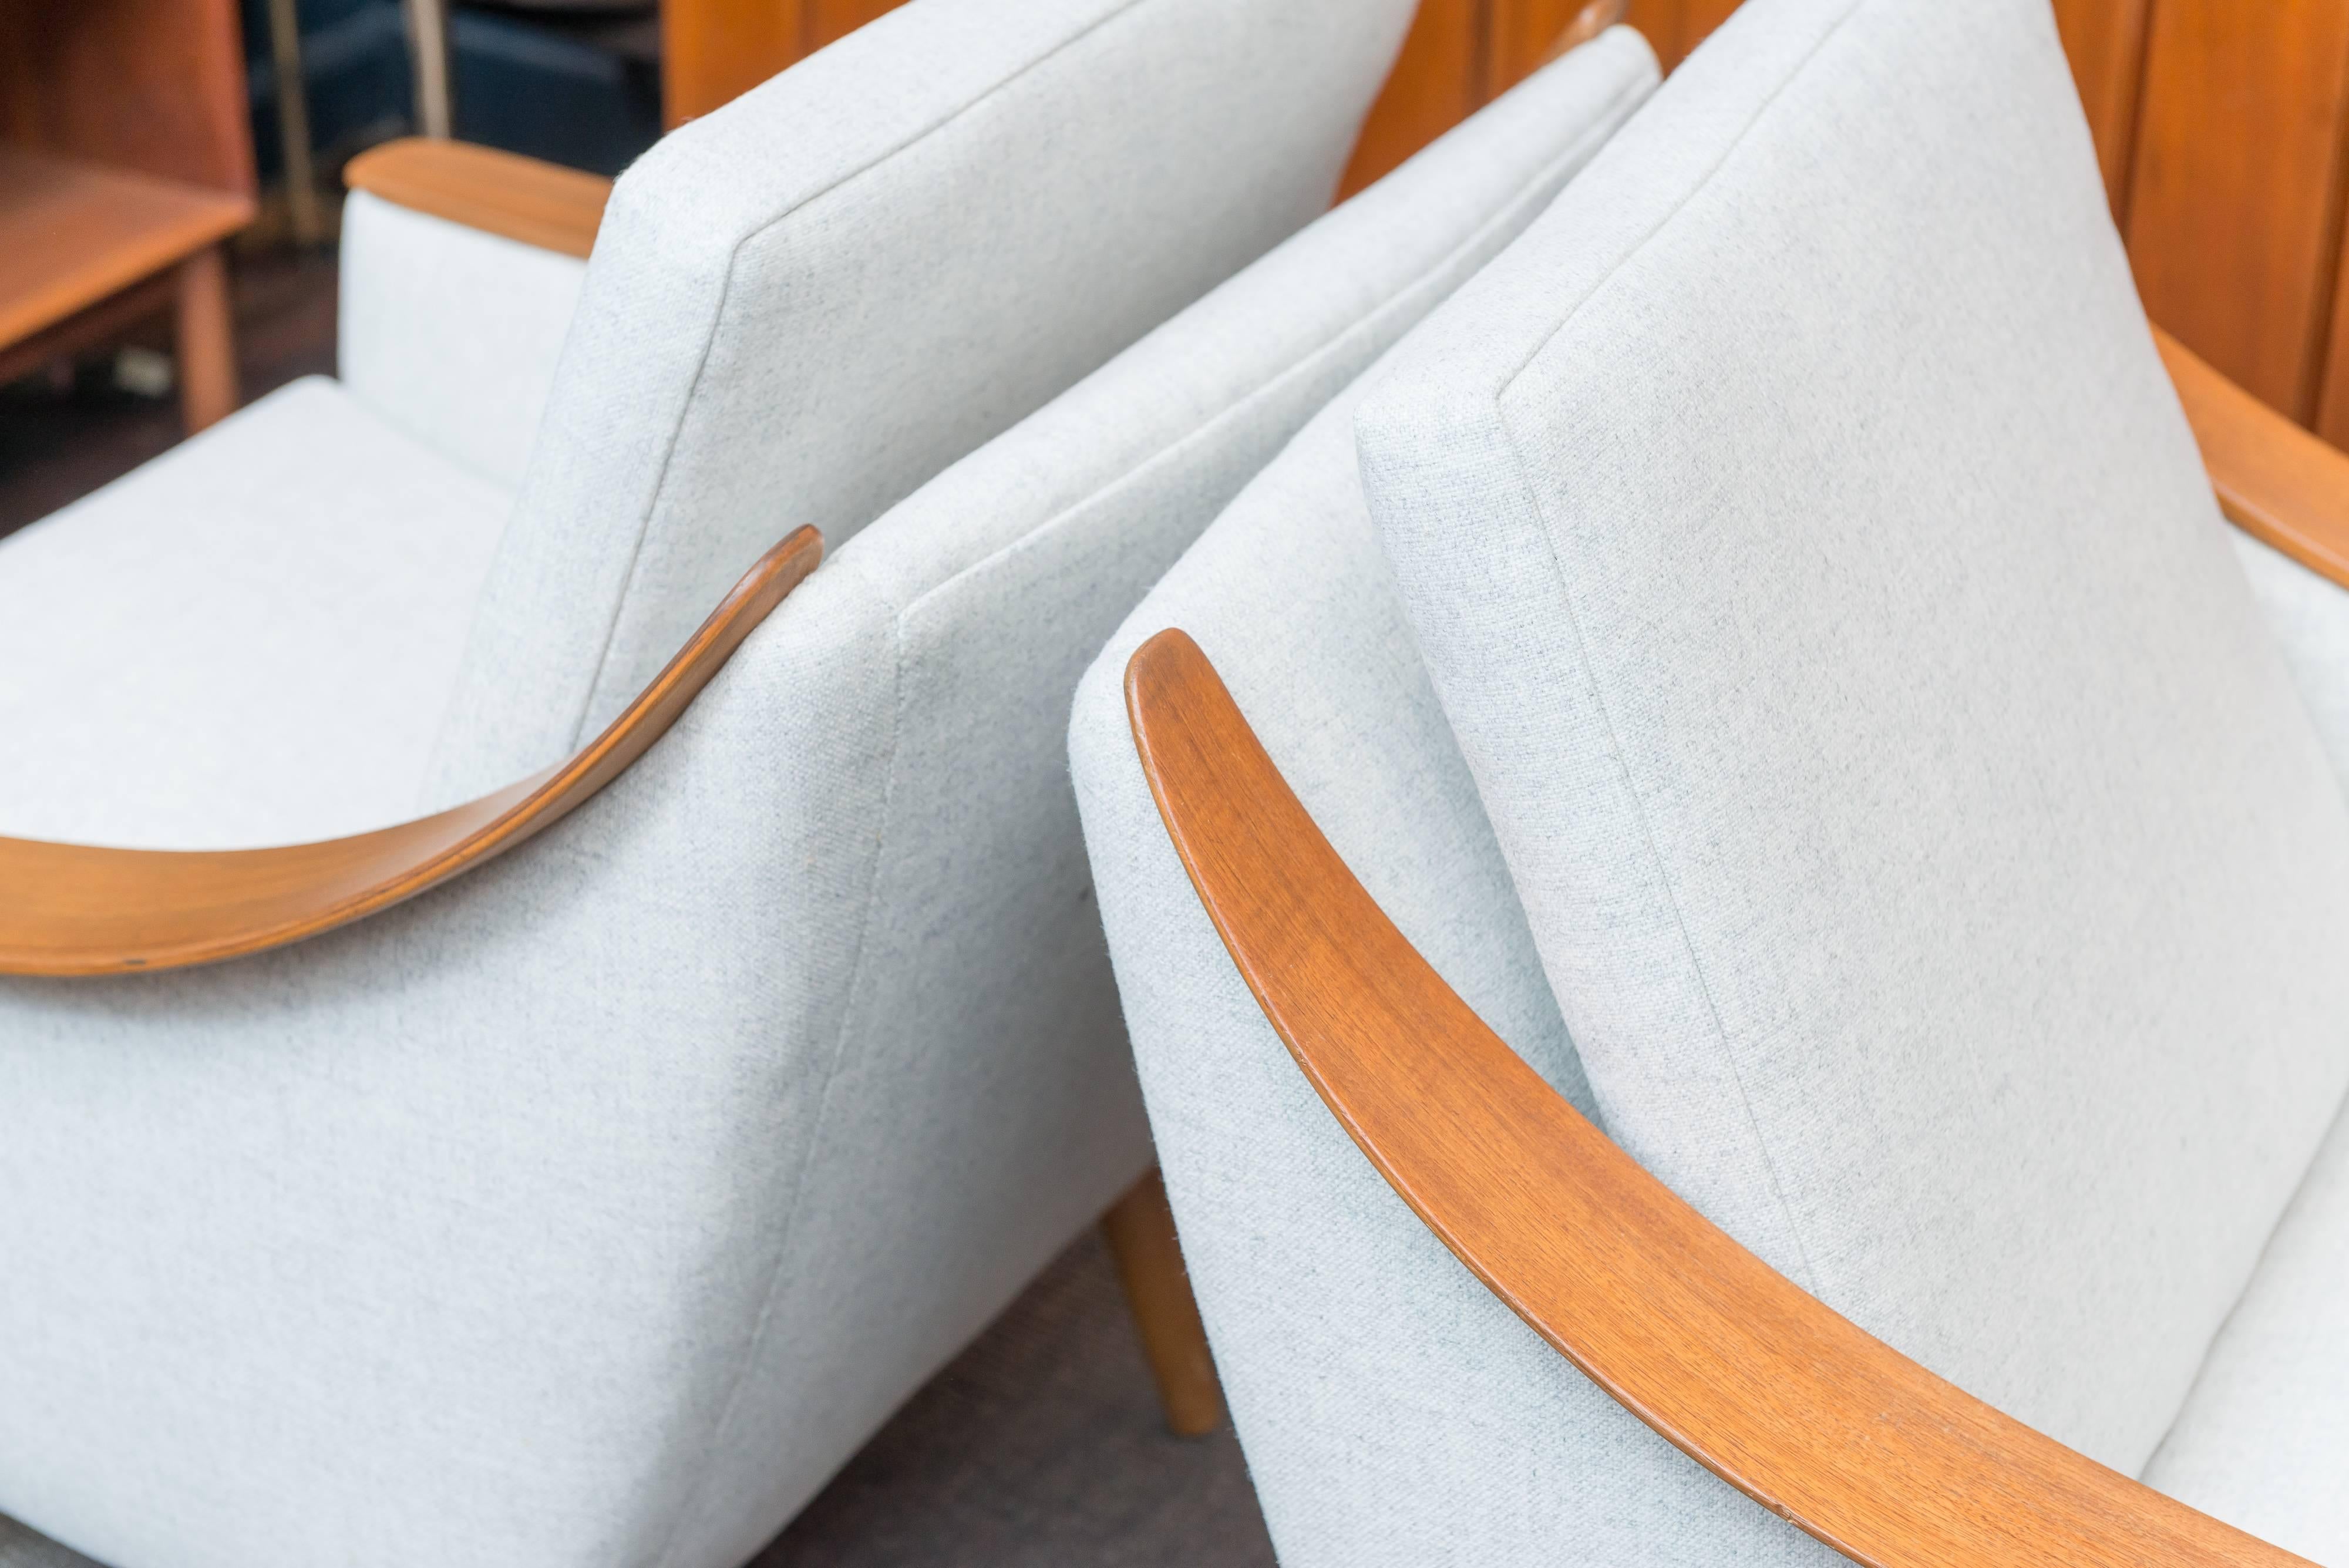 Mid-20th Century Danish Modern Lounge Chairs